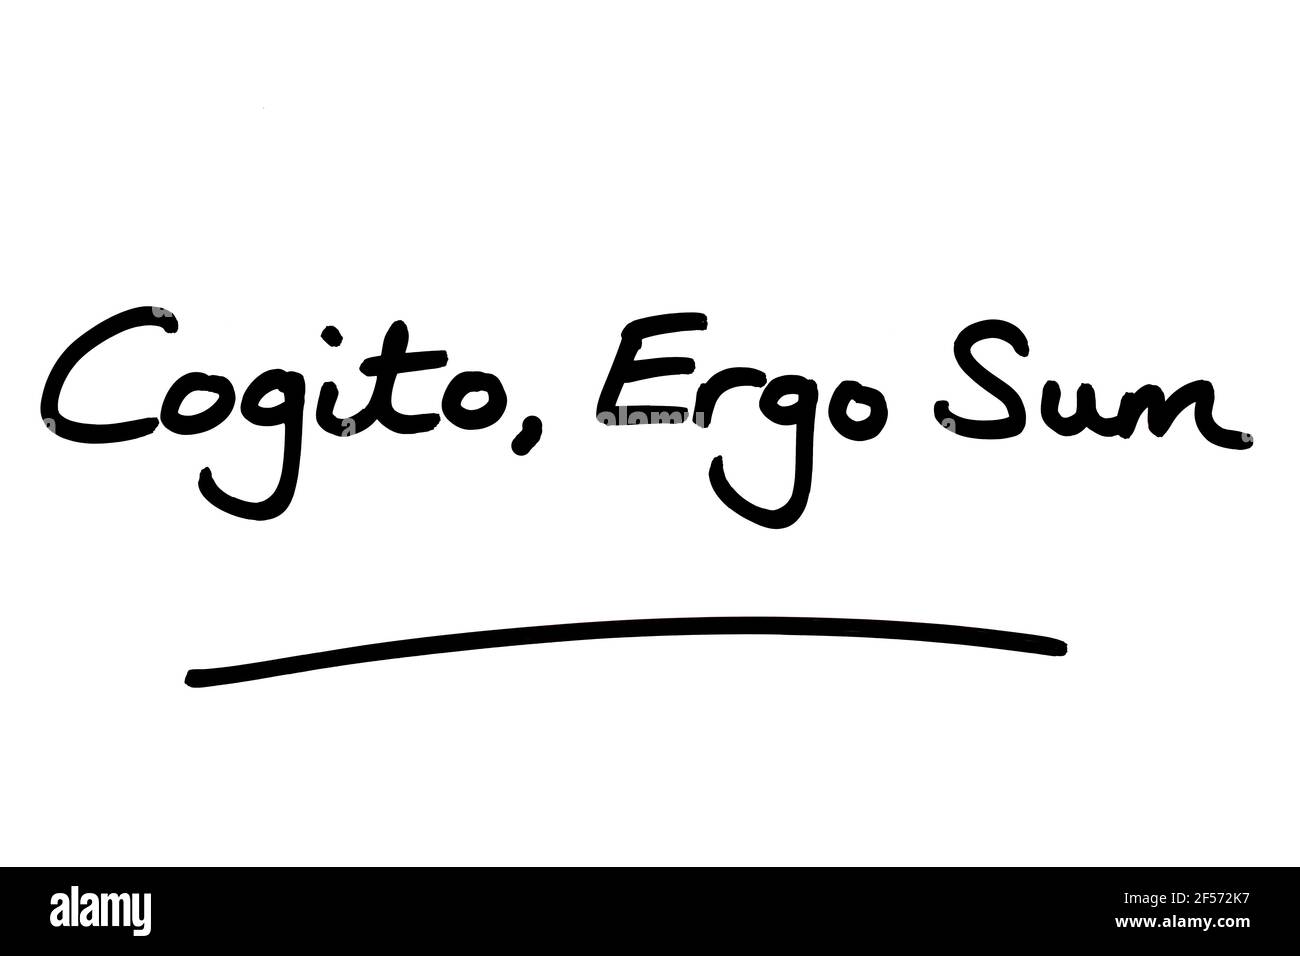 Cogito Ergo Sum, handwritten on a white background. Stock Photo